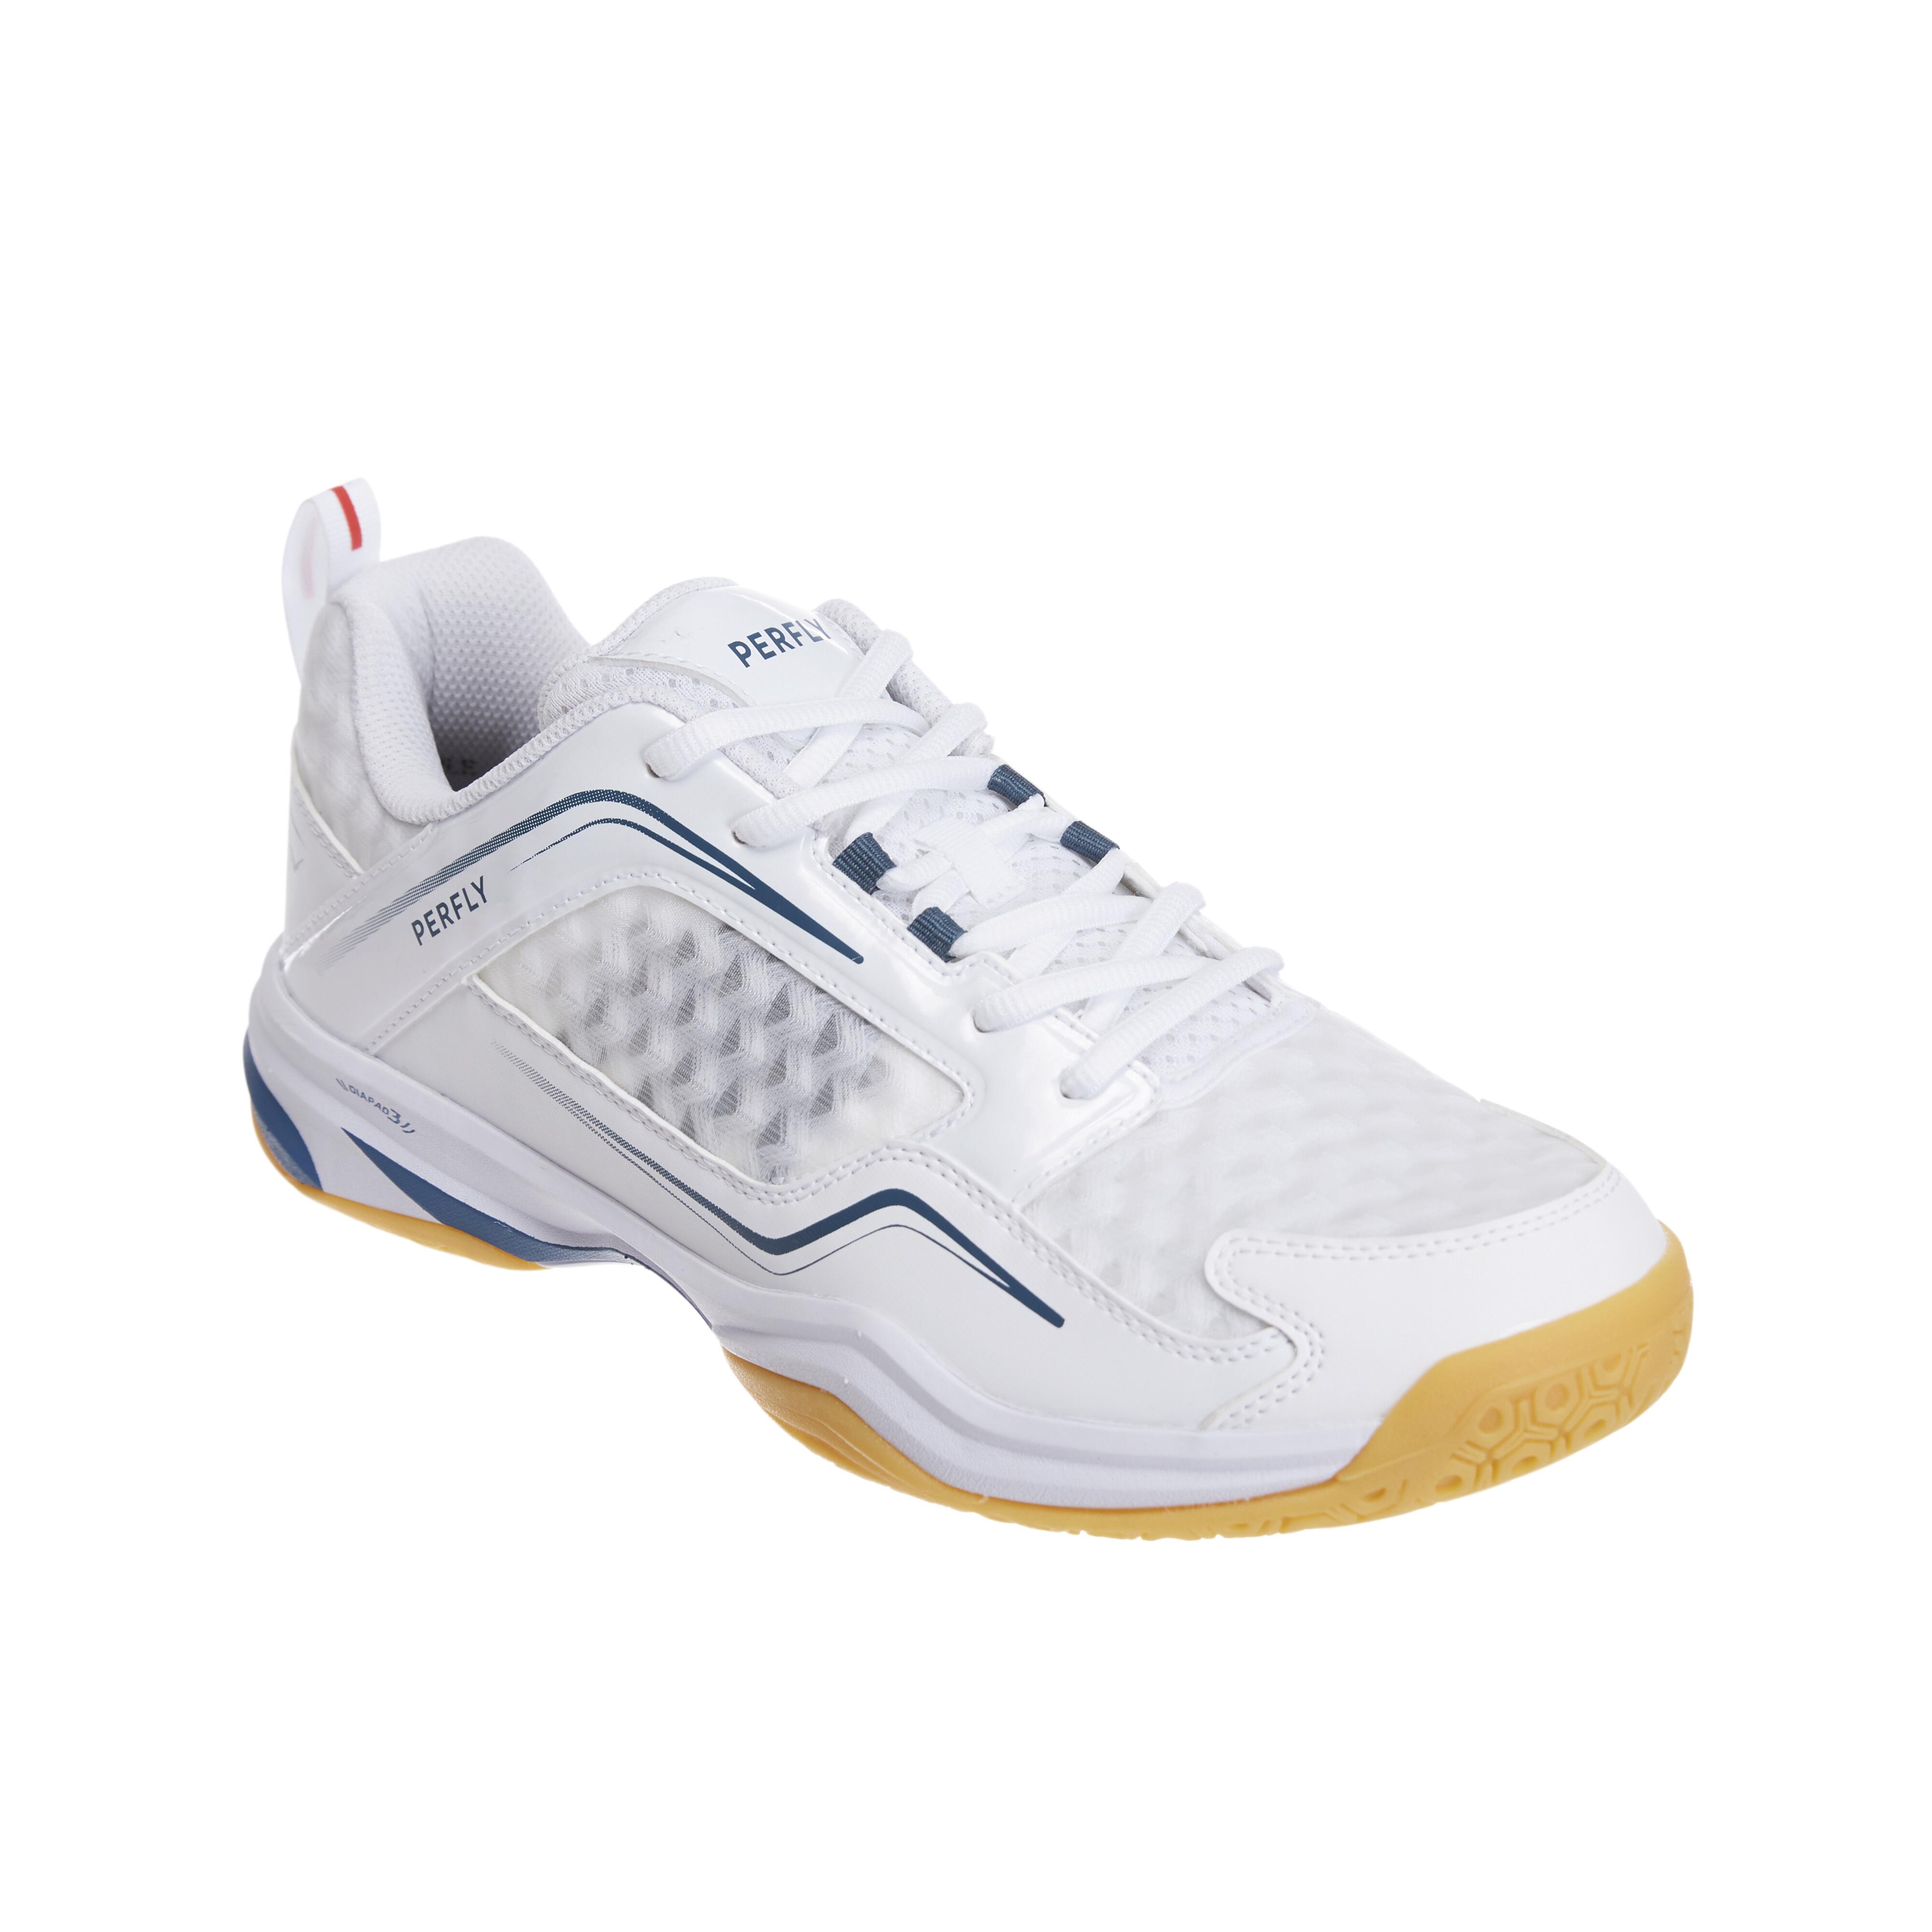 chaussures de badminton homme bs 560 lite - blanc - perfly